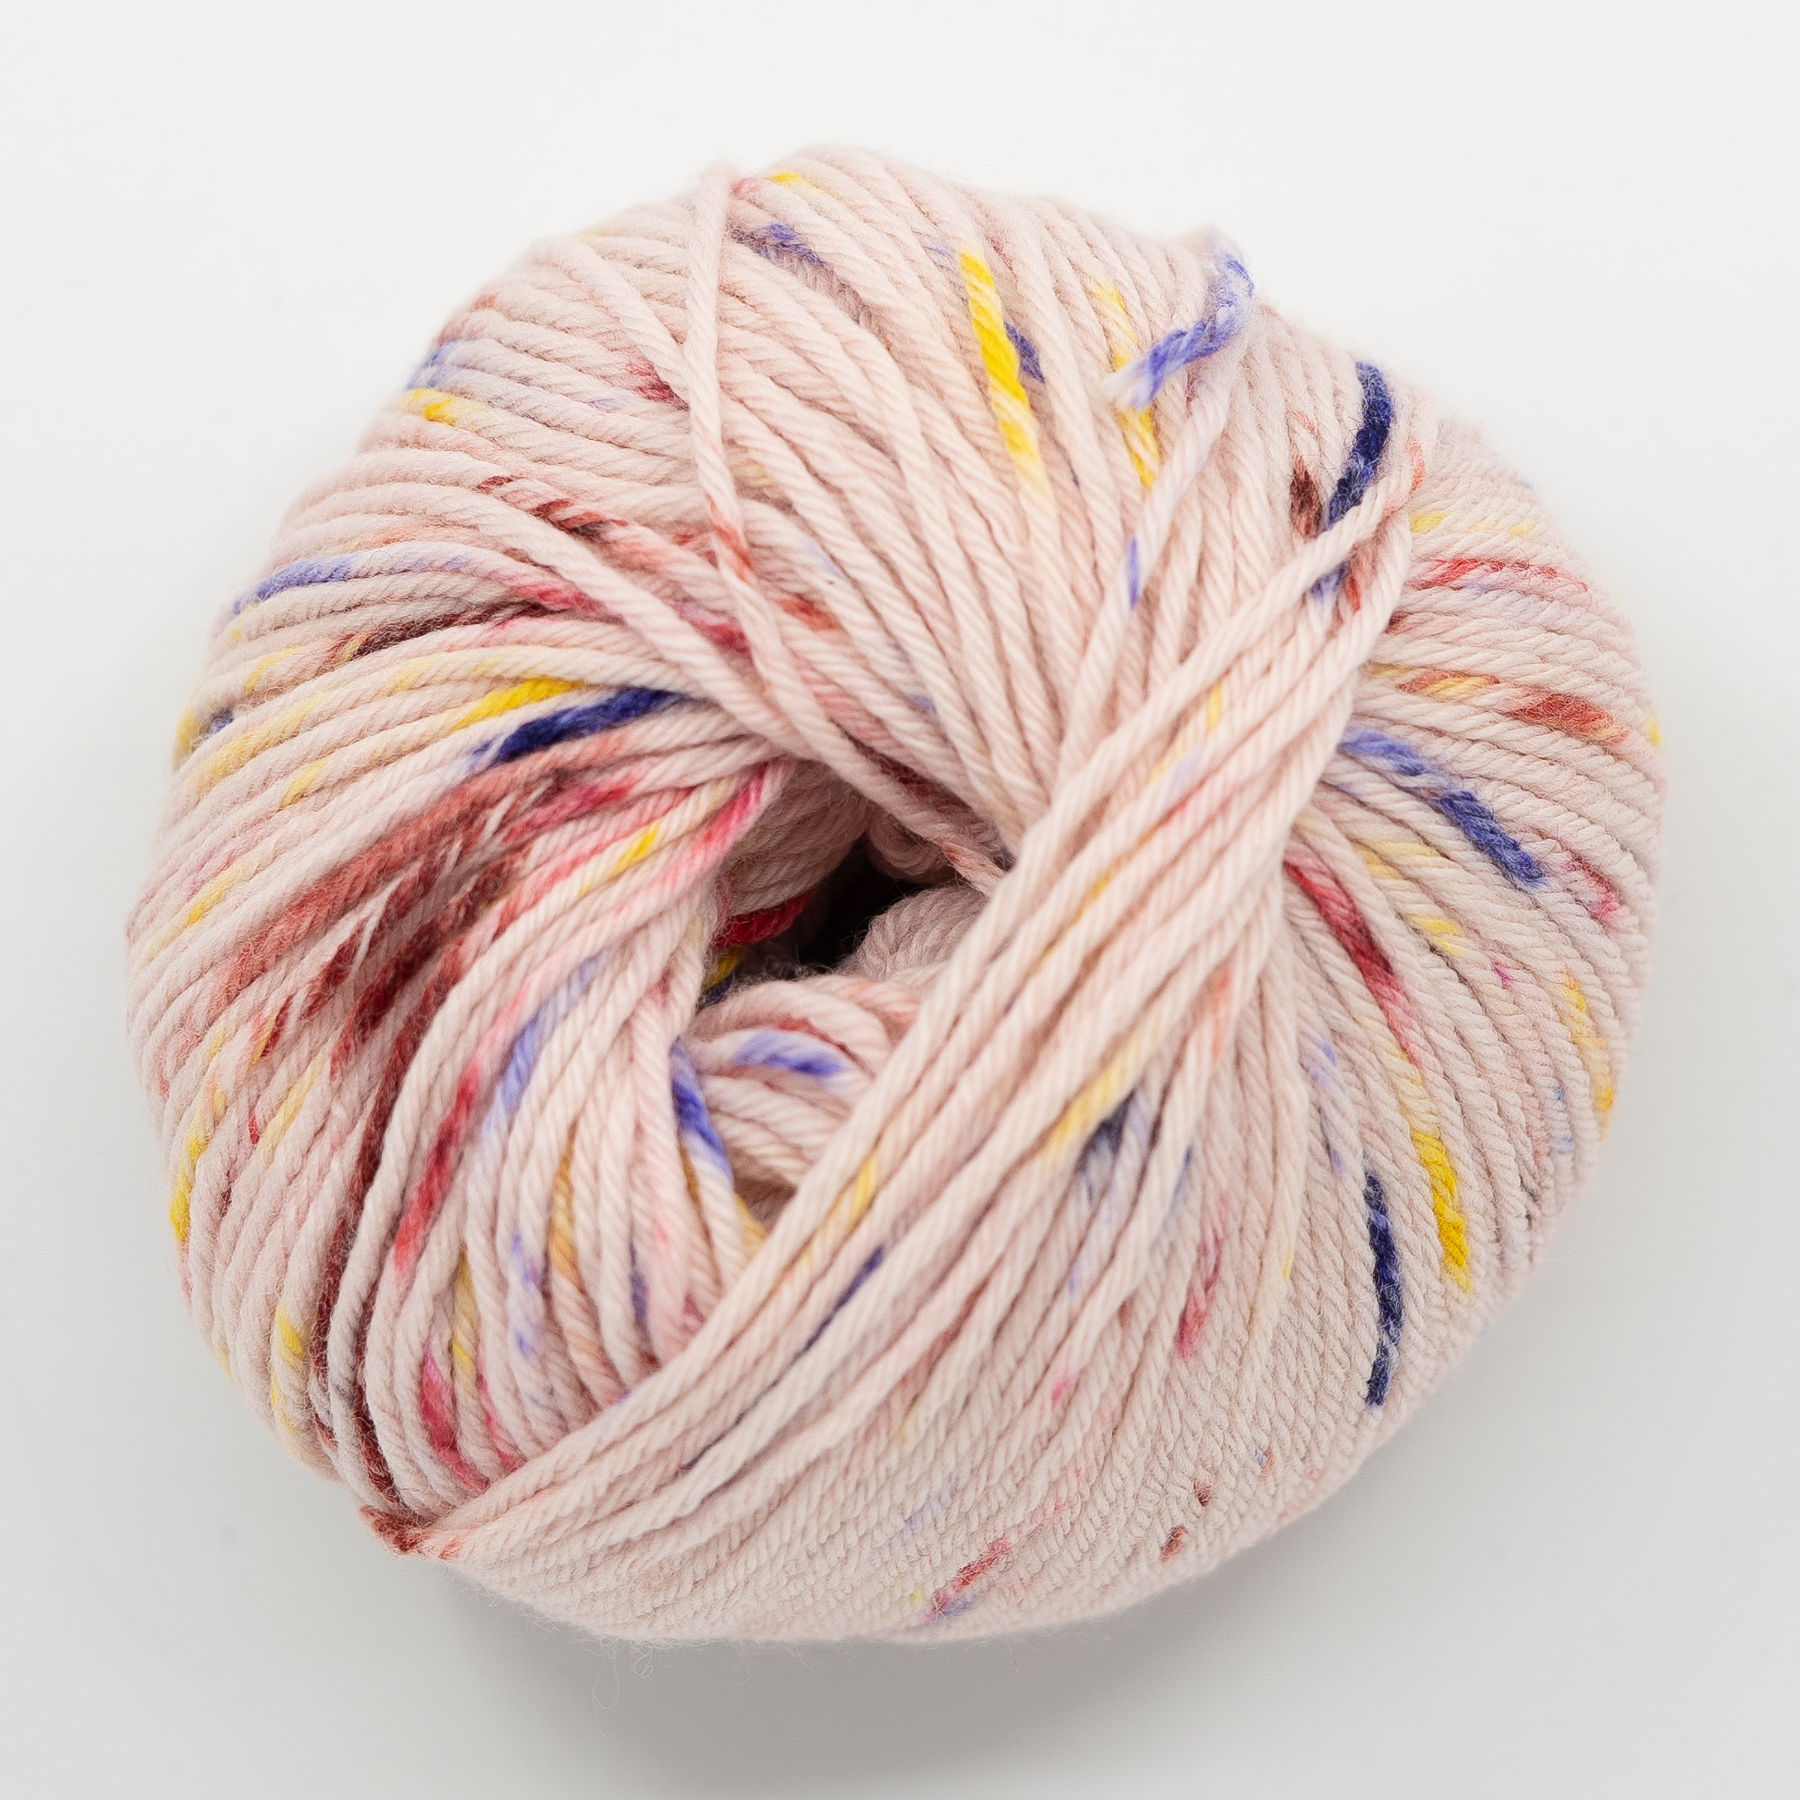  - Baby unicorn | Pop merino unicorn | Hand dyed yarn - by HipKnitShop - 25/04/2021